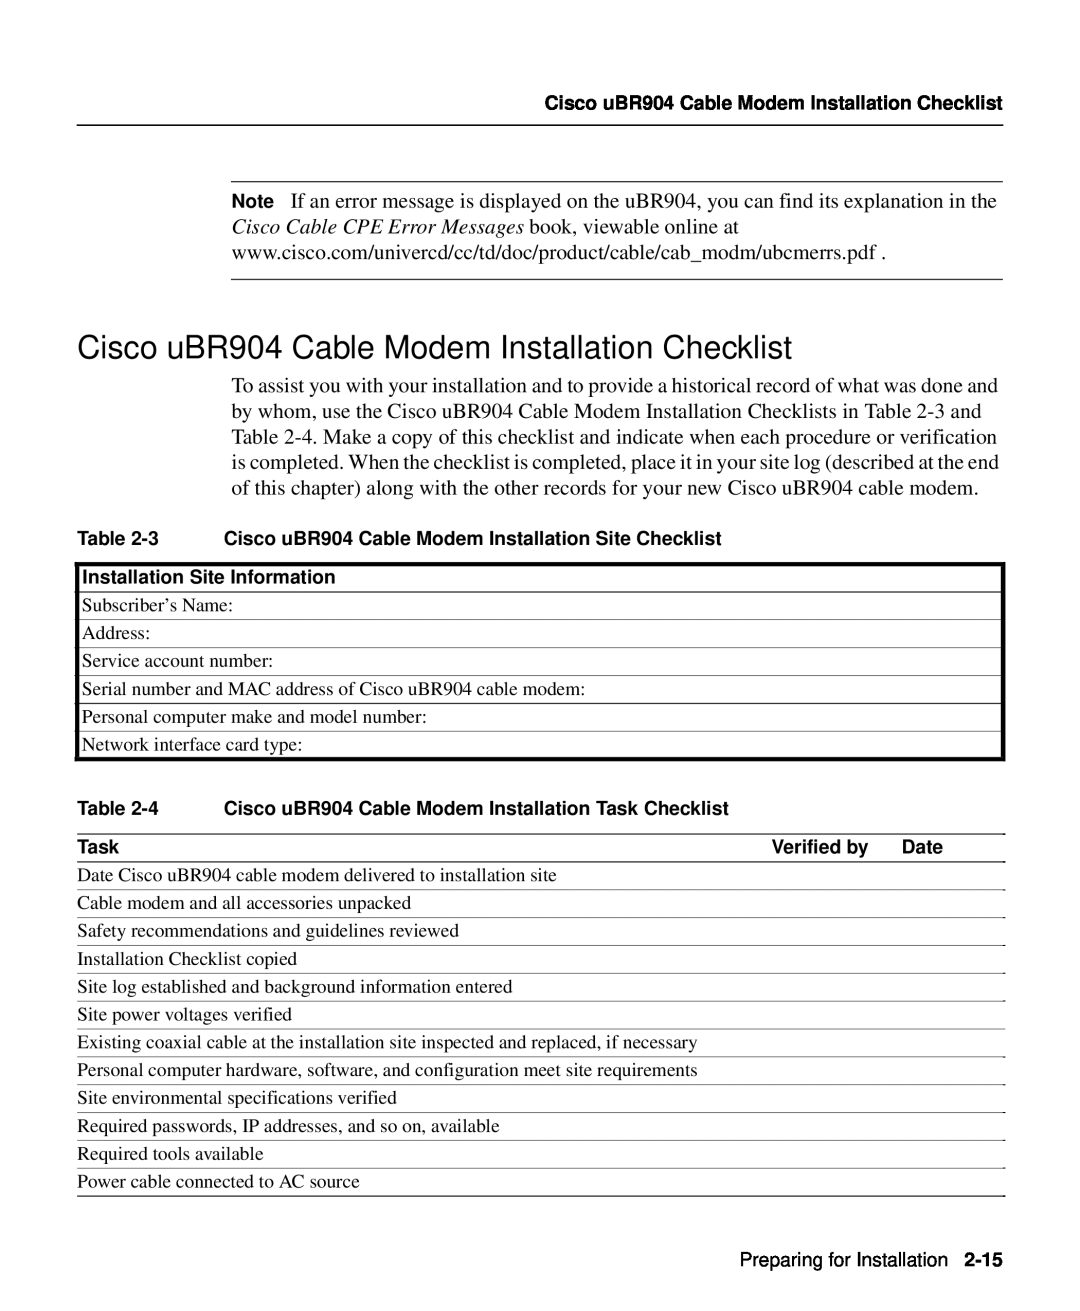 Cisco Systems UBR904 manual Cisco uBR904 Cable Modem Installation Checklist, Installation Site Information, Task 